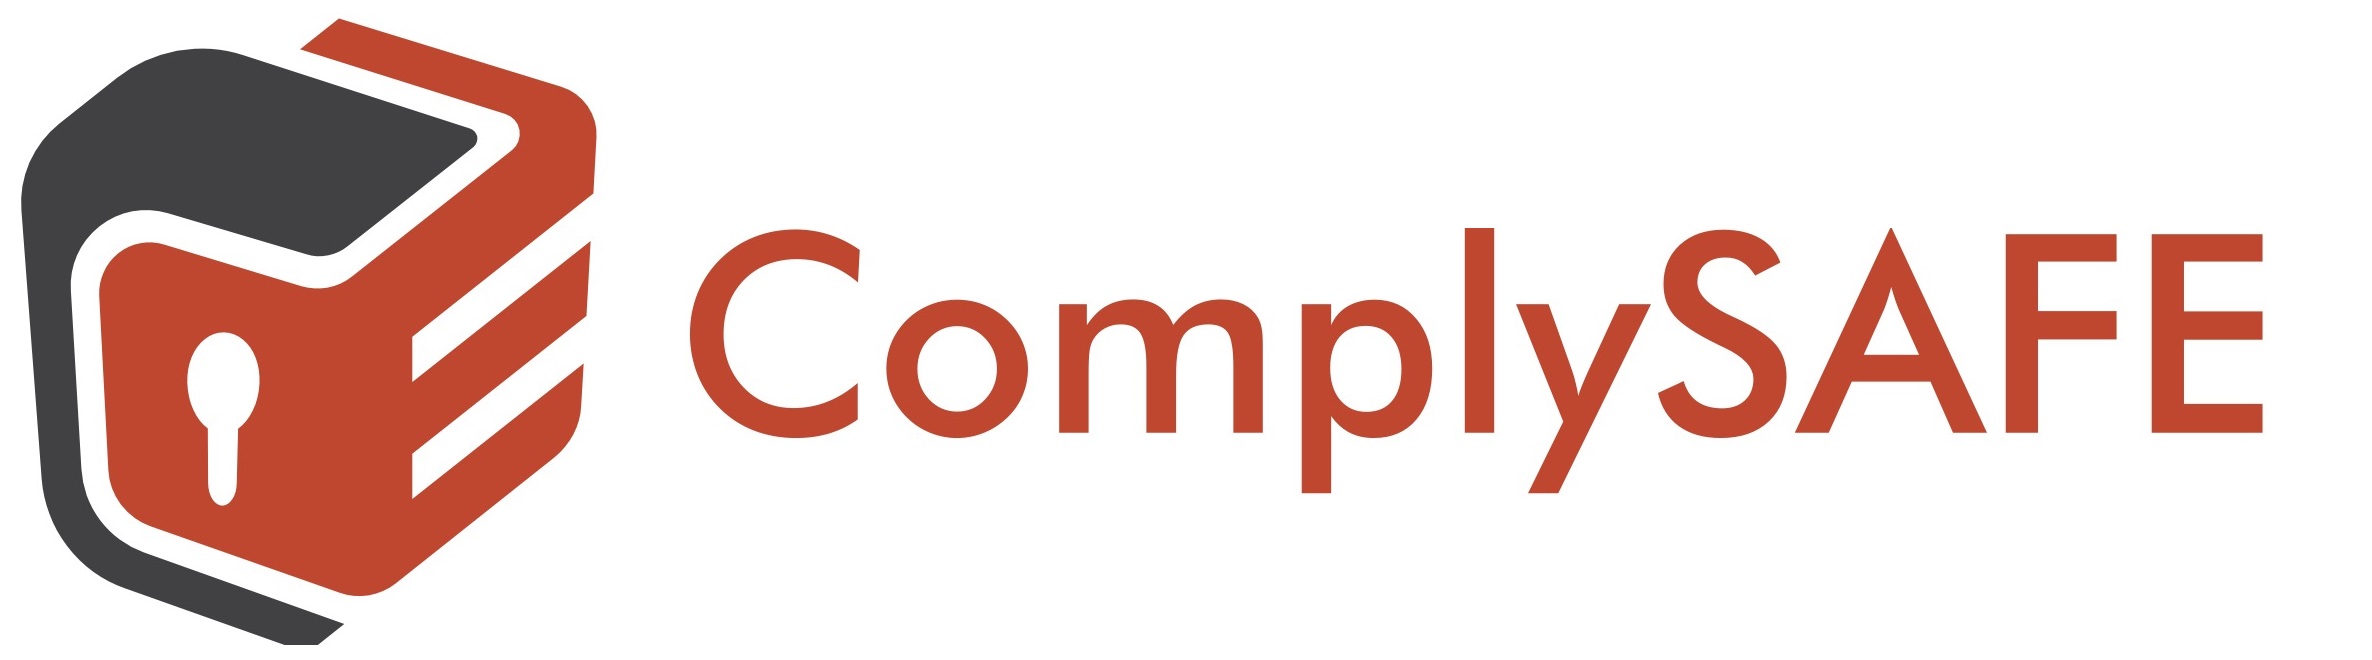 ComplySAFE | Garda vetting and compliance software Ireland